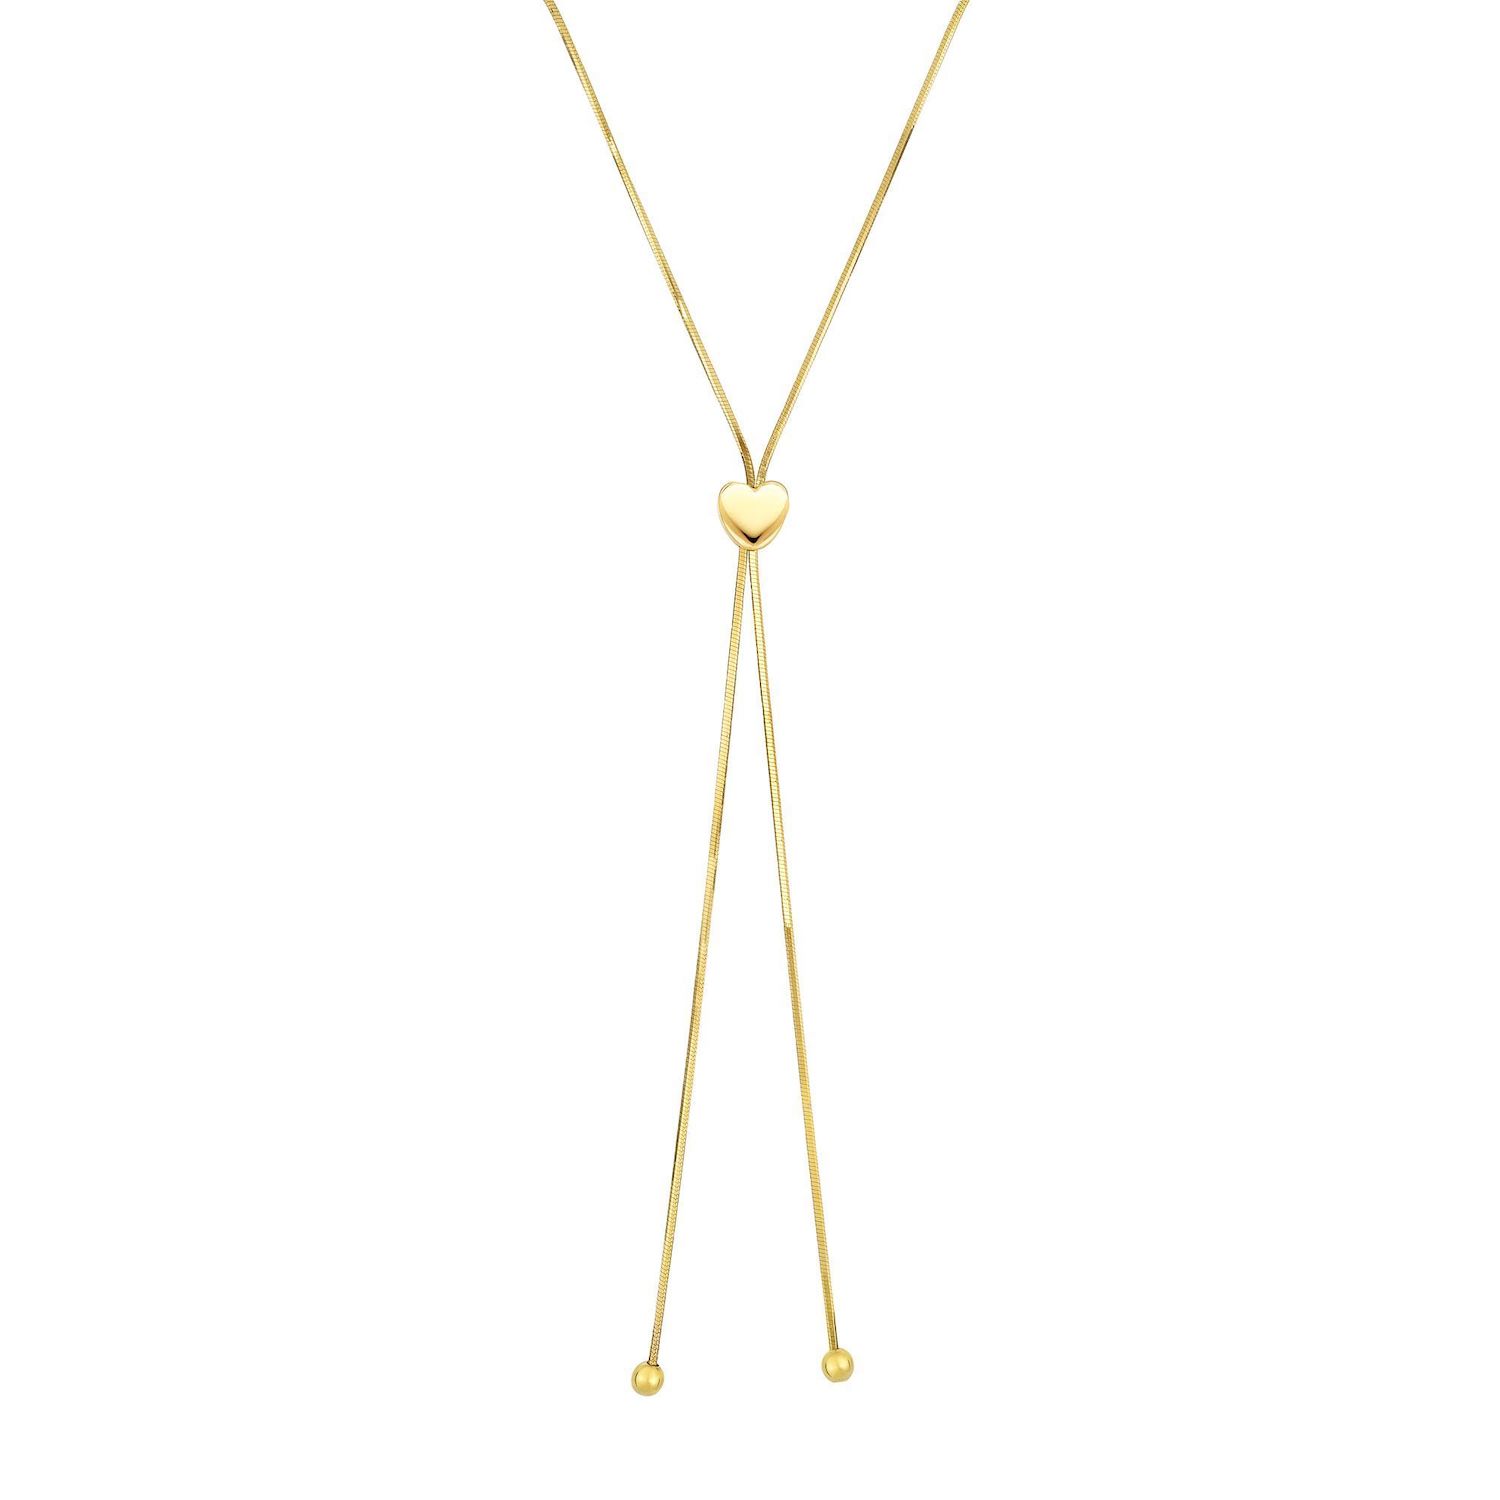 14K Yellow Gold Snake Slide Lariat Heart Pendant Chain Necklace 24" Adjustable